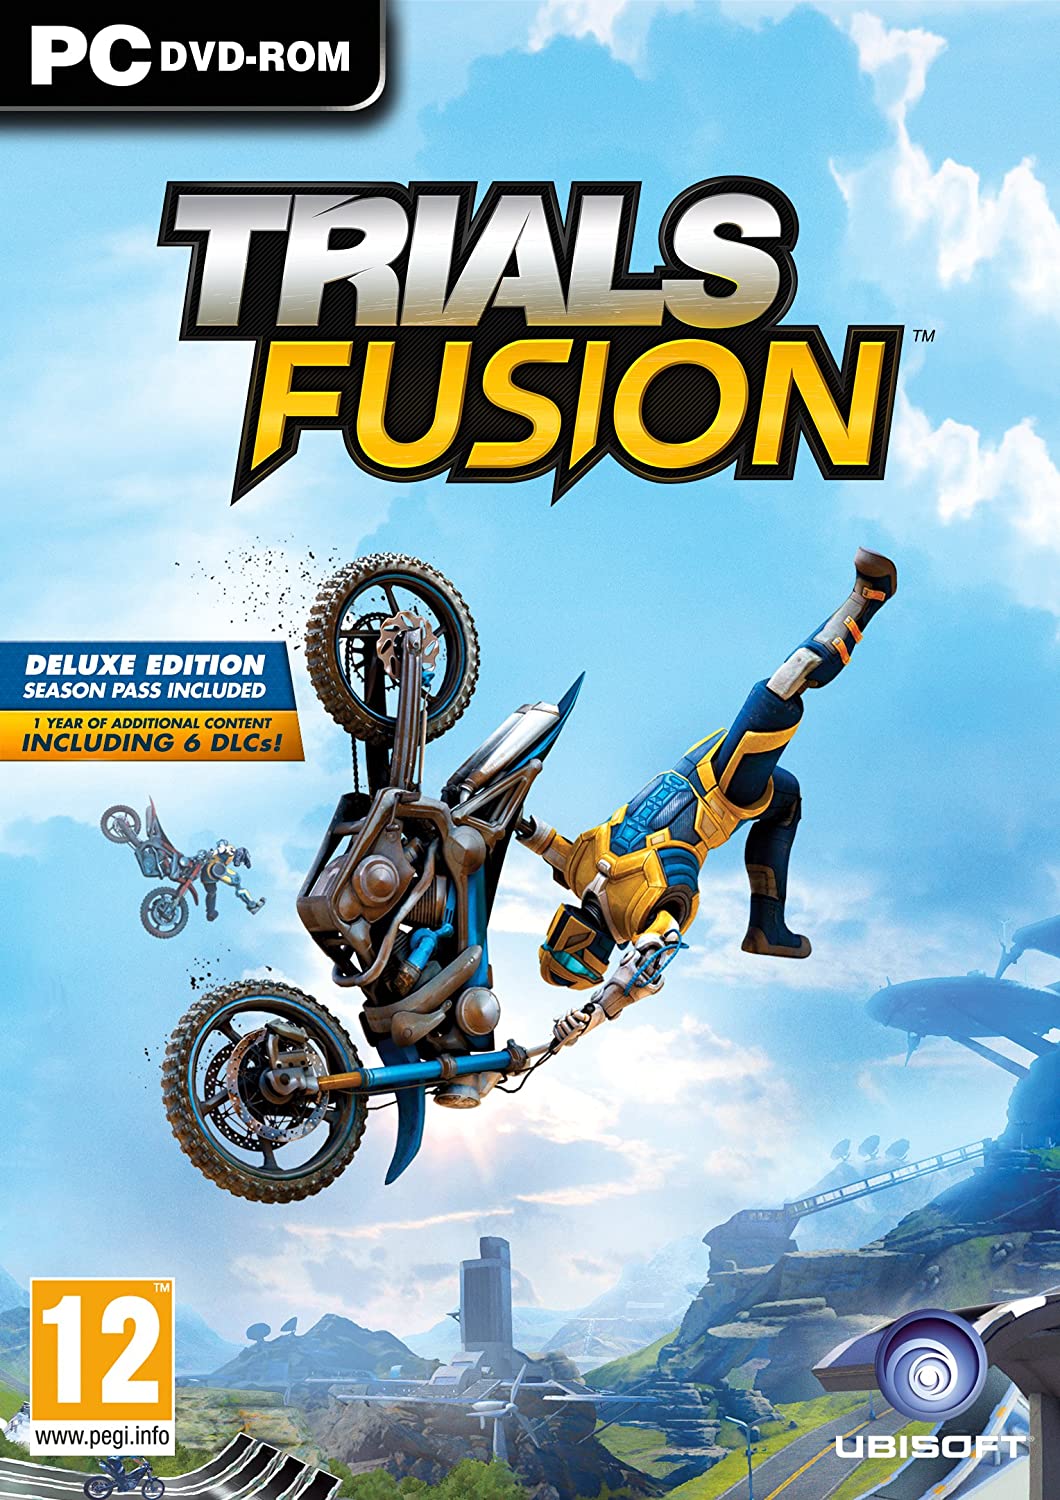 Trials Fusion (PC-DVD)